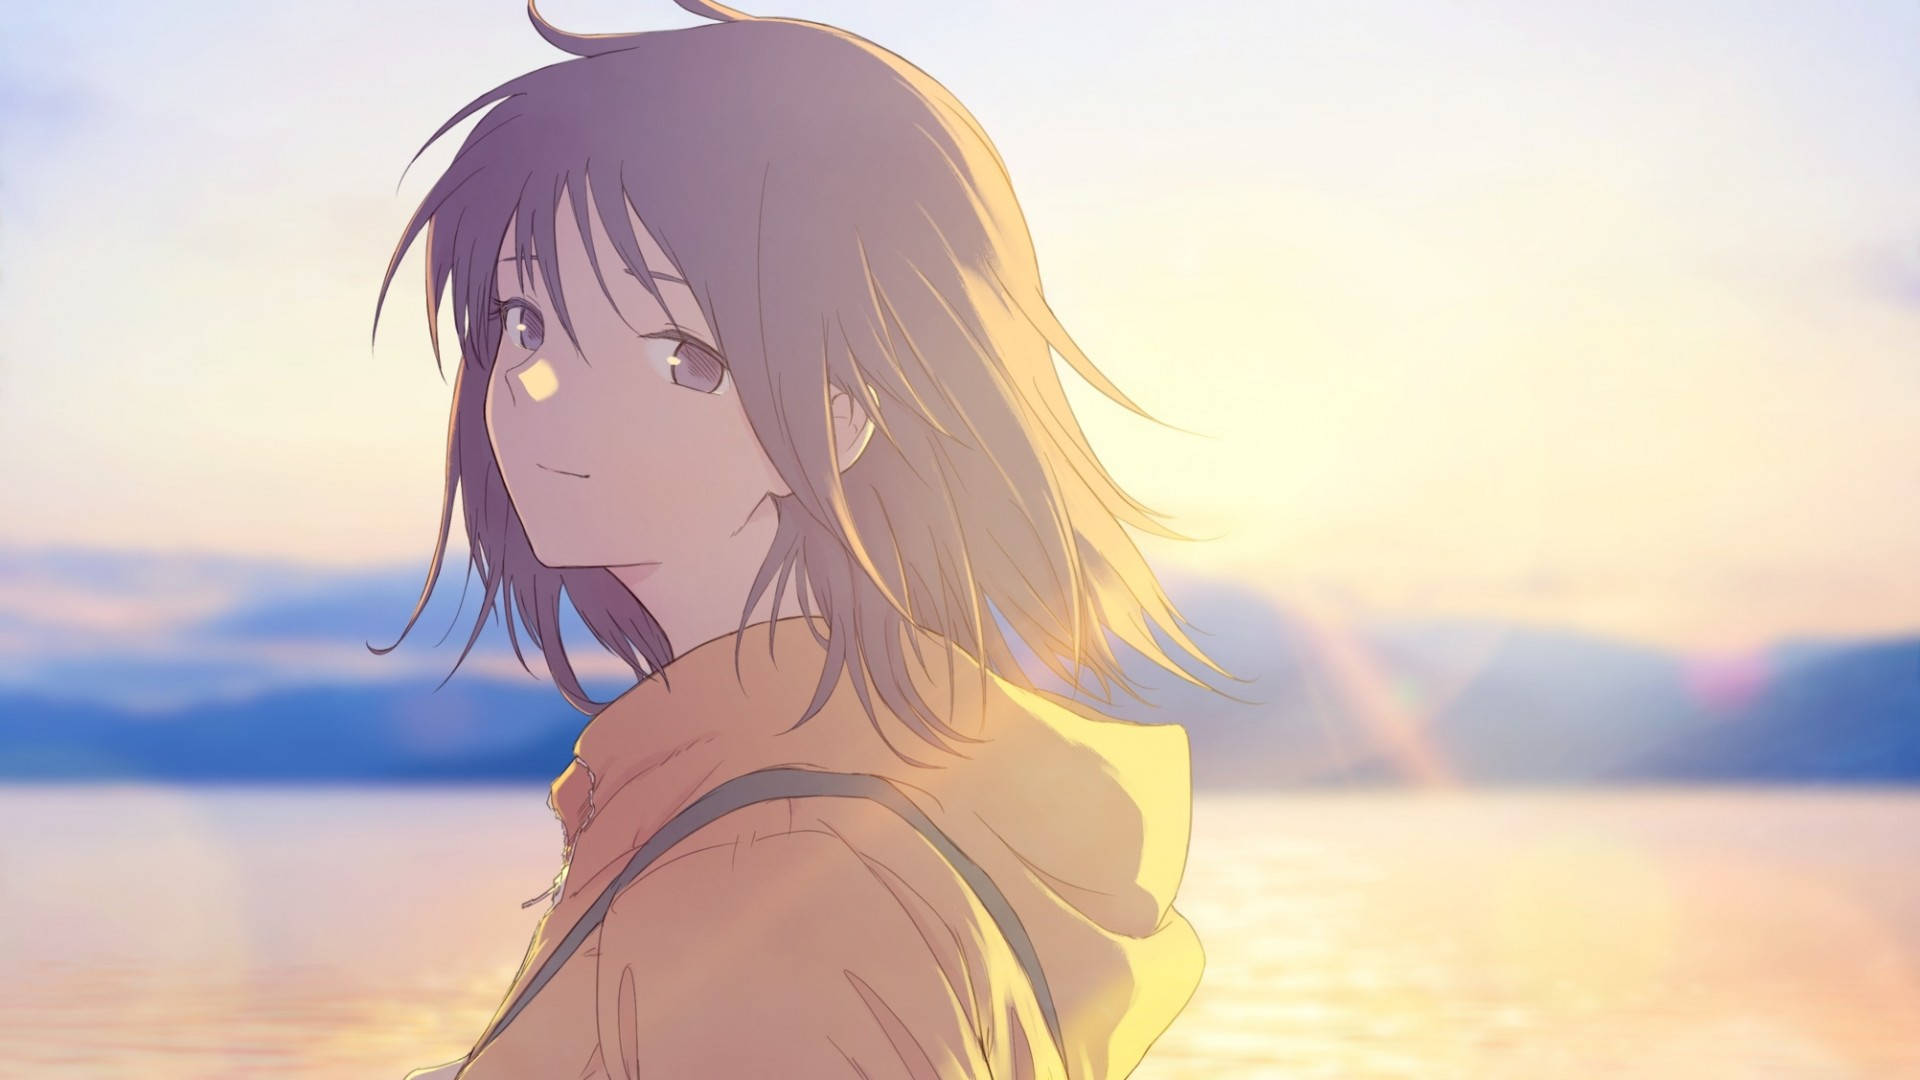 Sunset Anime Girl Hoodie Background